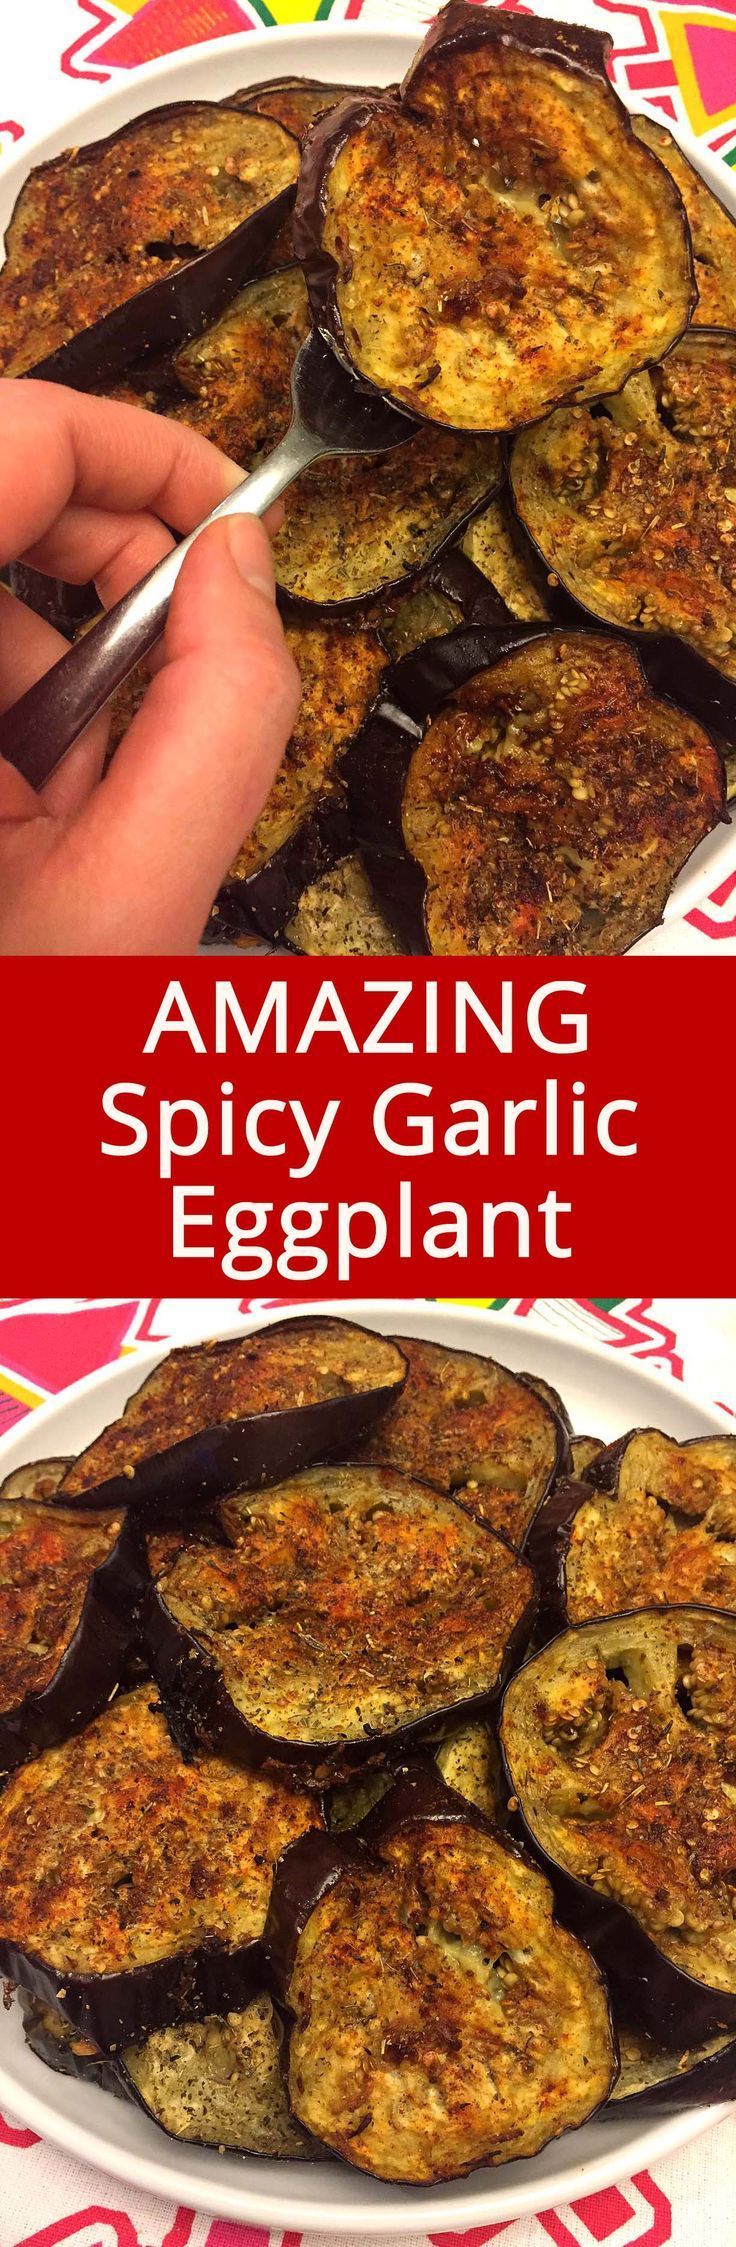 These spicy garlic eggplant slices are so addictive! LOVE this recipe!